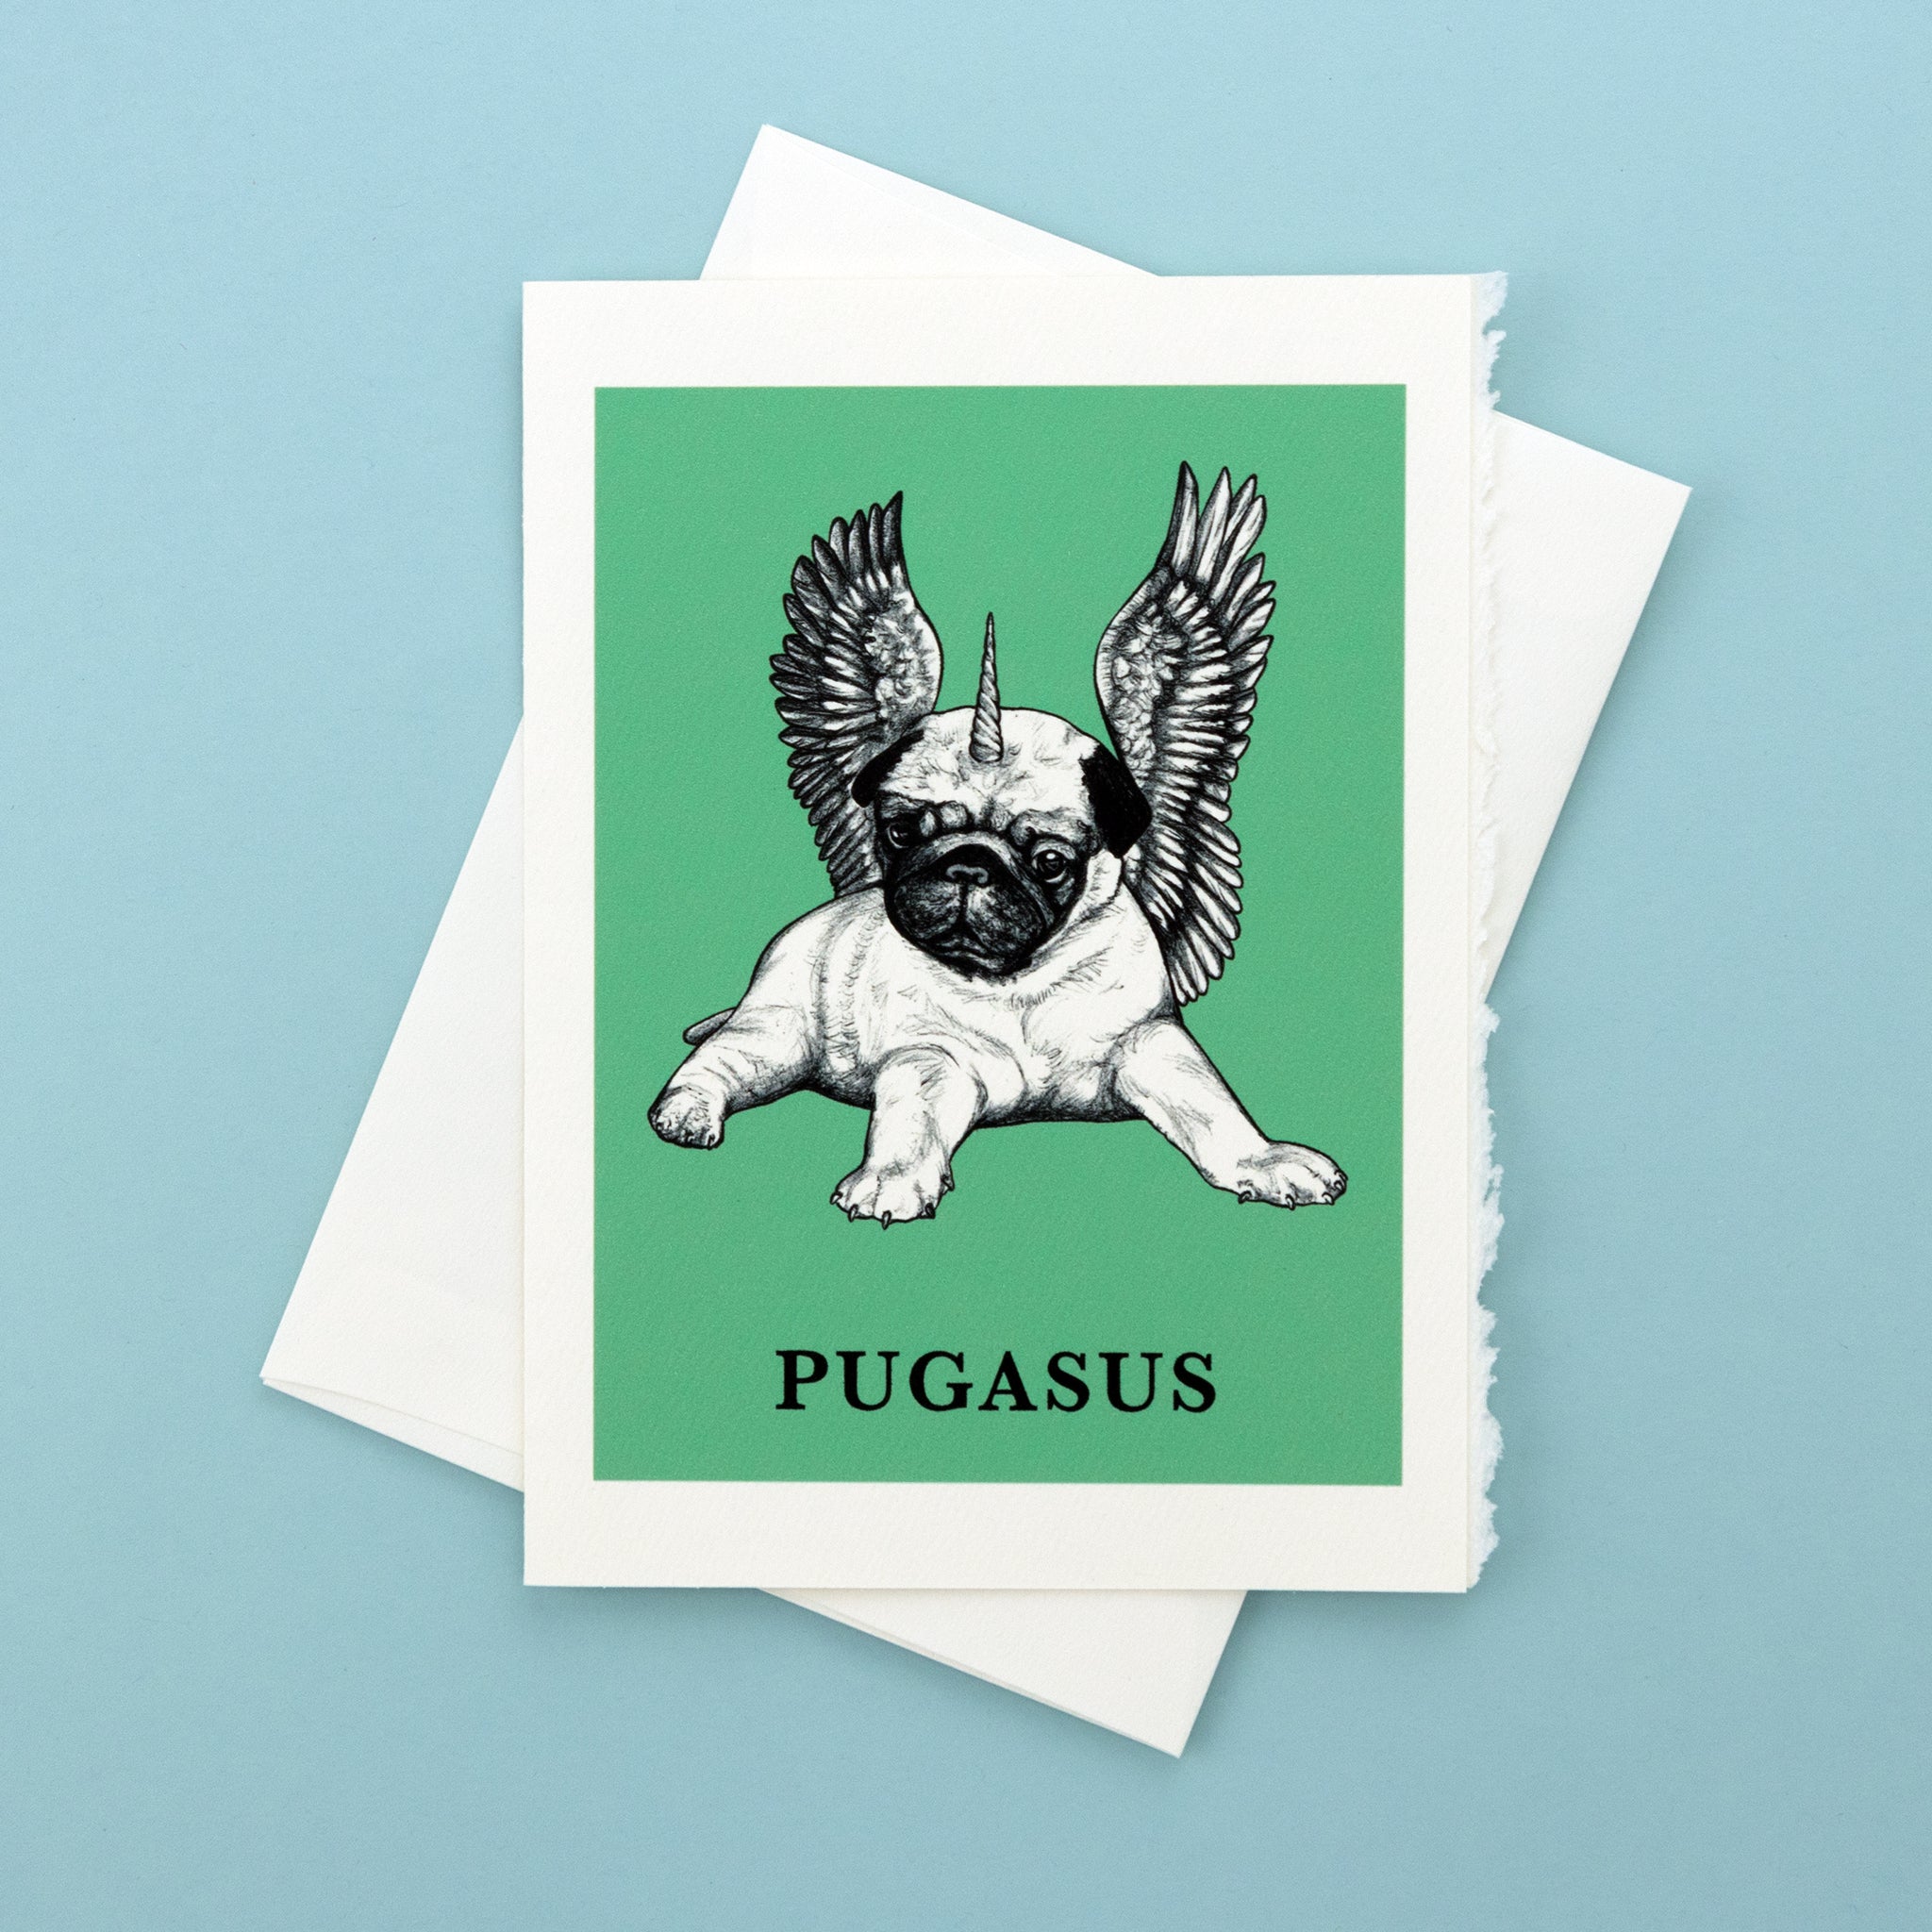 Pugasus | Pug + Pegasus Hybrid Animal | 5x7" Greeting Card